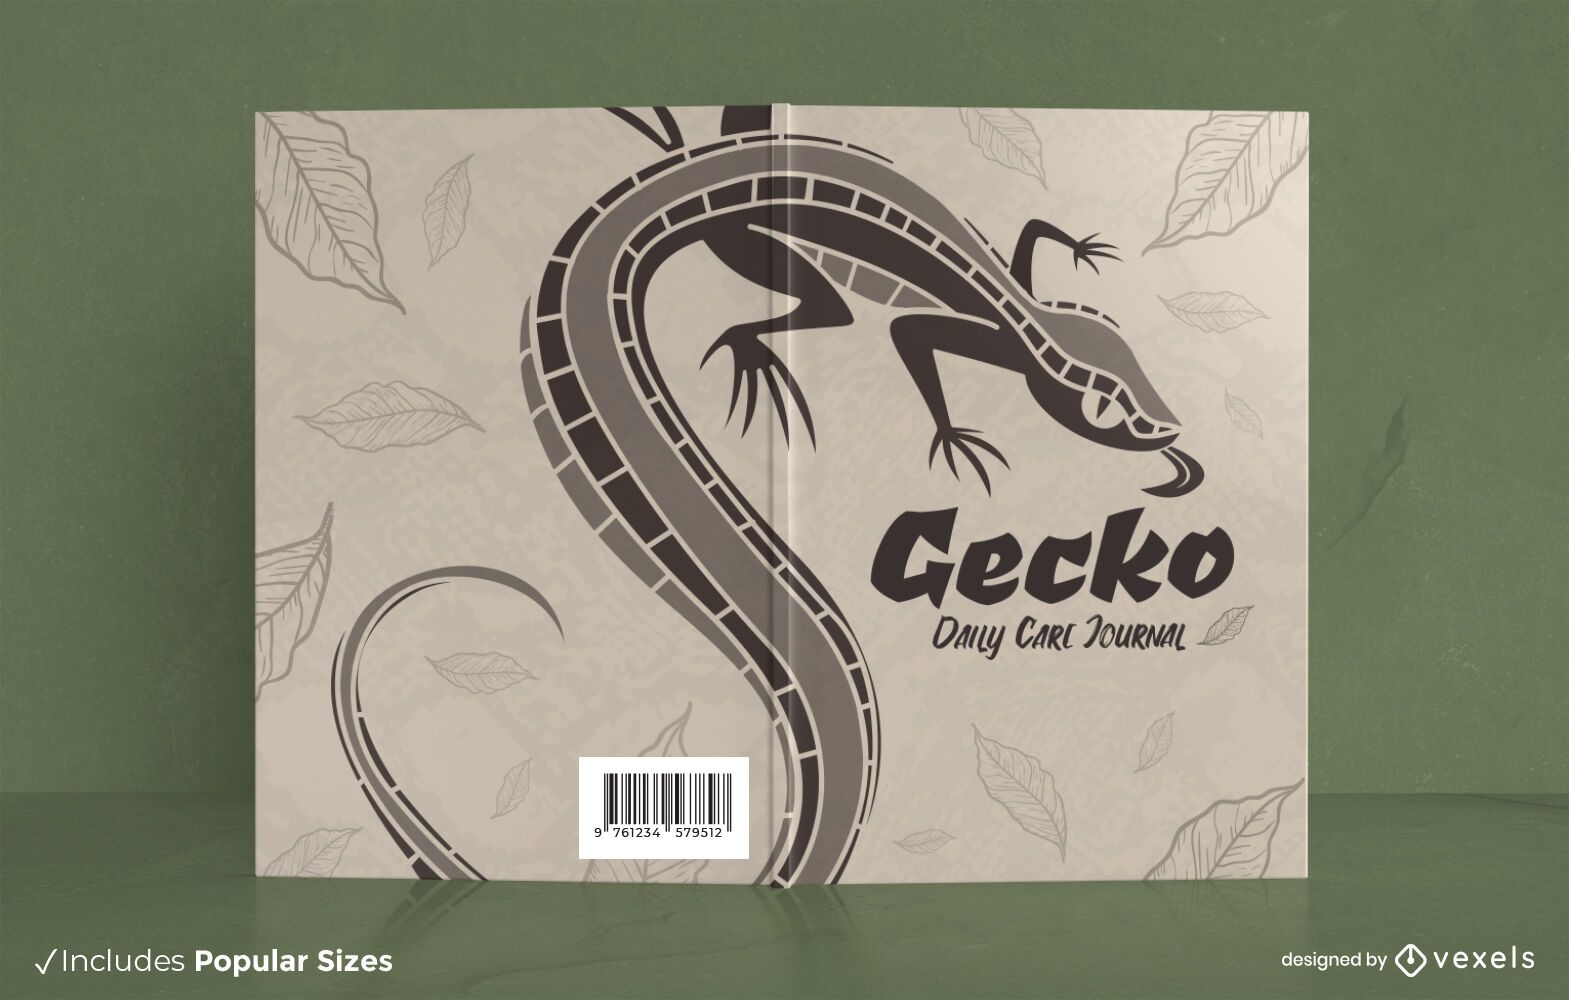 Gecko-Pflegebuch-Cover-Design